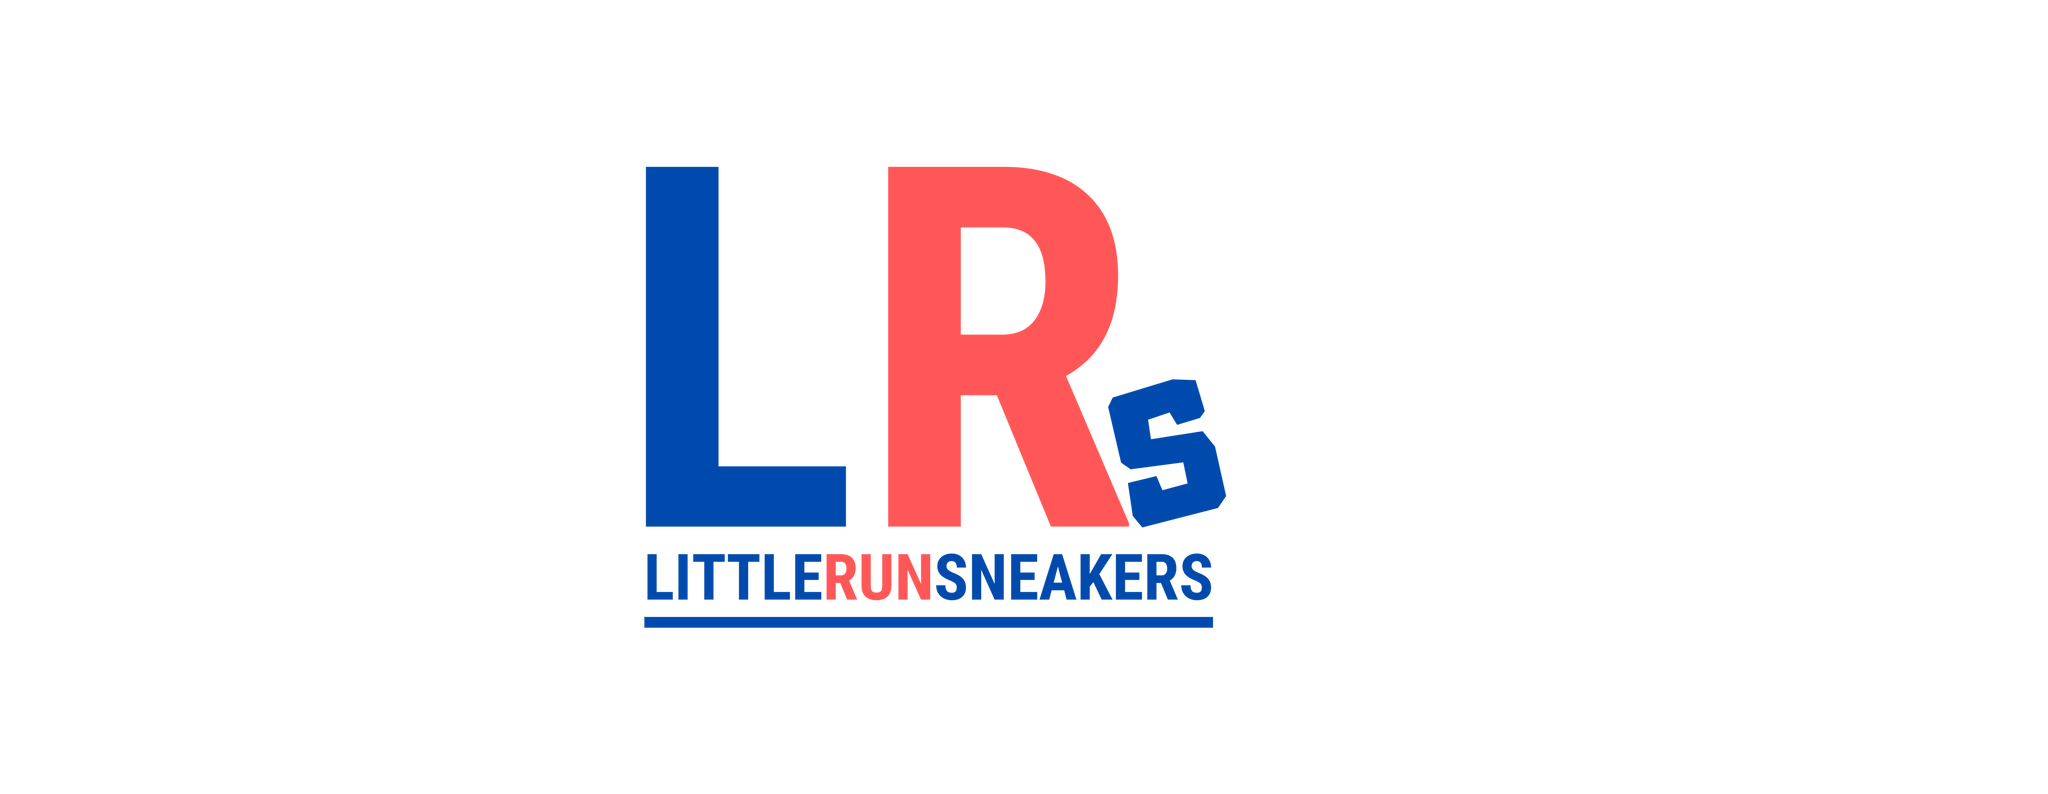 Little Run Sneakers Gift Card 200 €